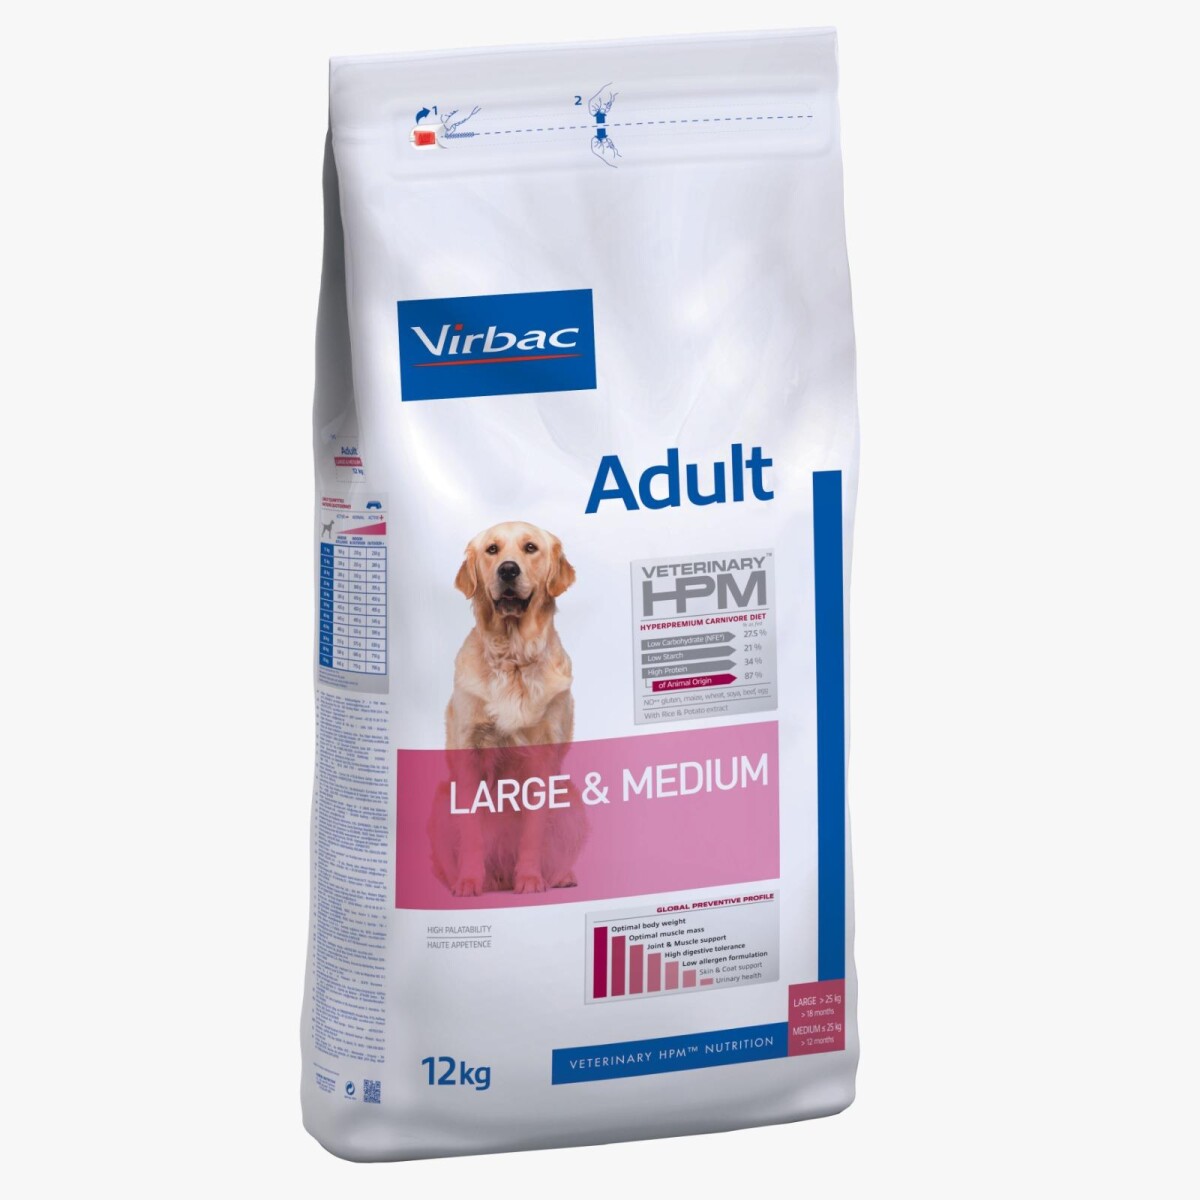 HPM ADULT DOG LARGE & MEDIUM 12 KG - Hpm Adult Dog Large & Medium 12 Kg 